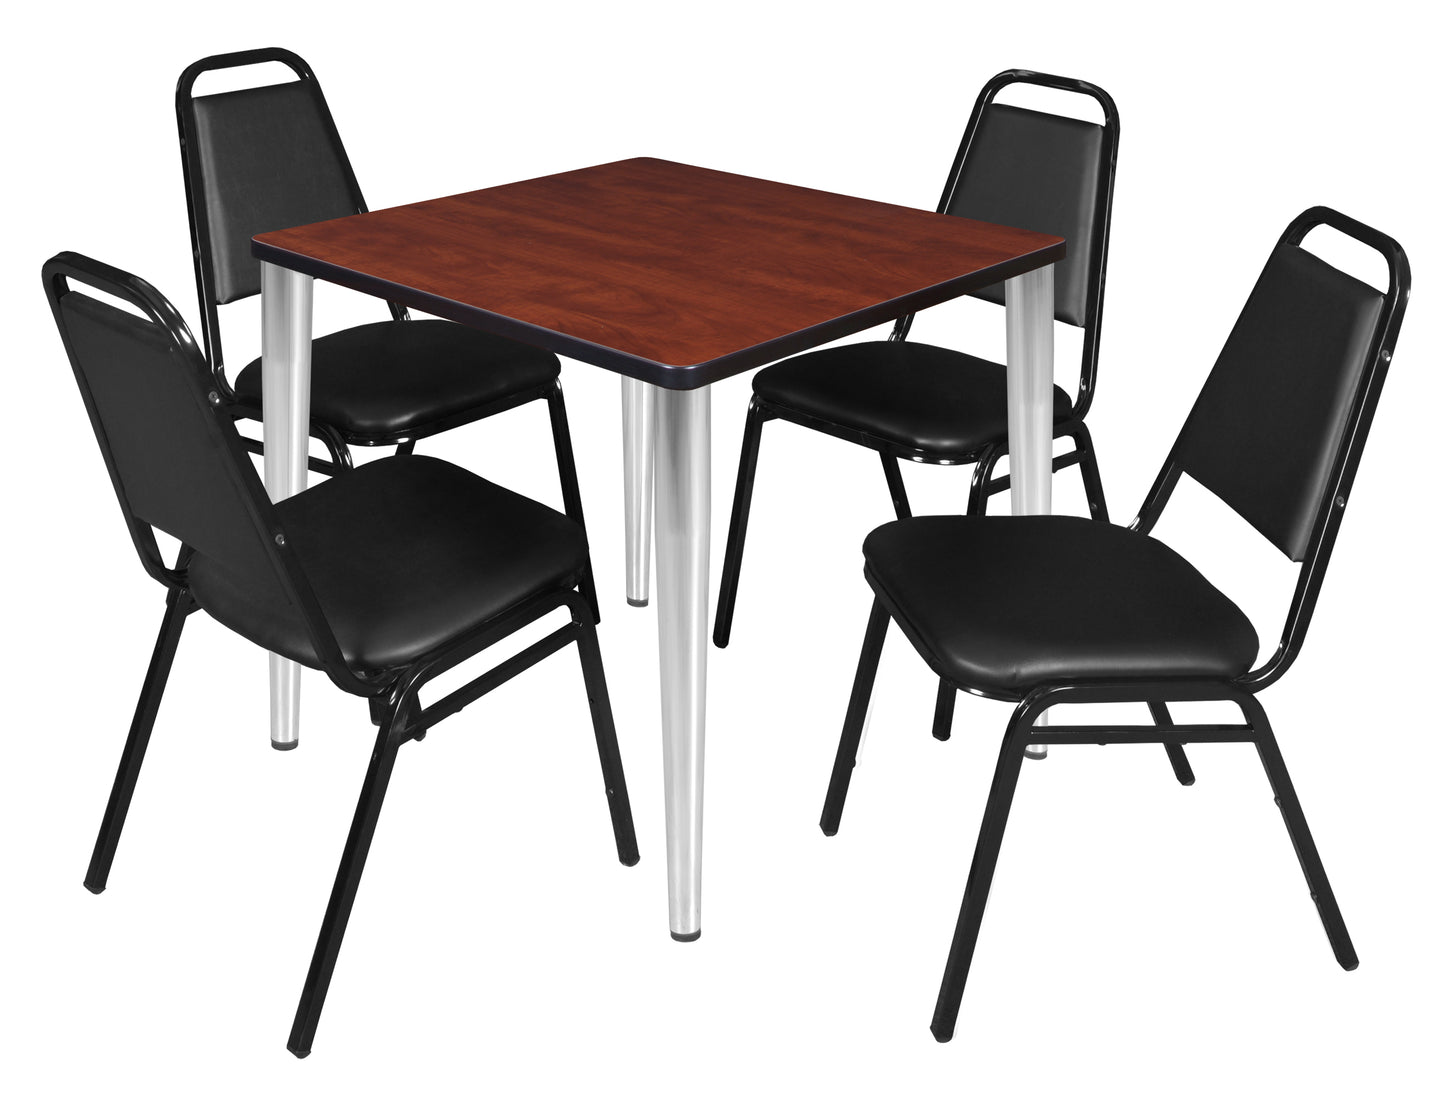 Regency Kahlo 30 in. Square Breakroom Table & 4 Restaurant Stack Chairs - Black